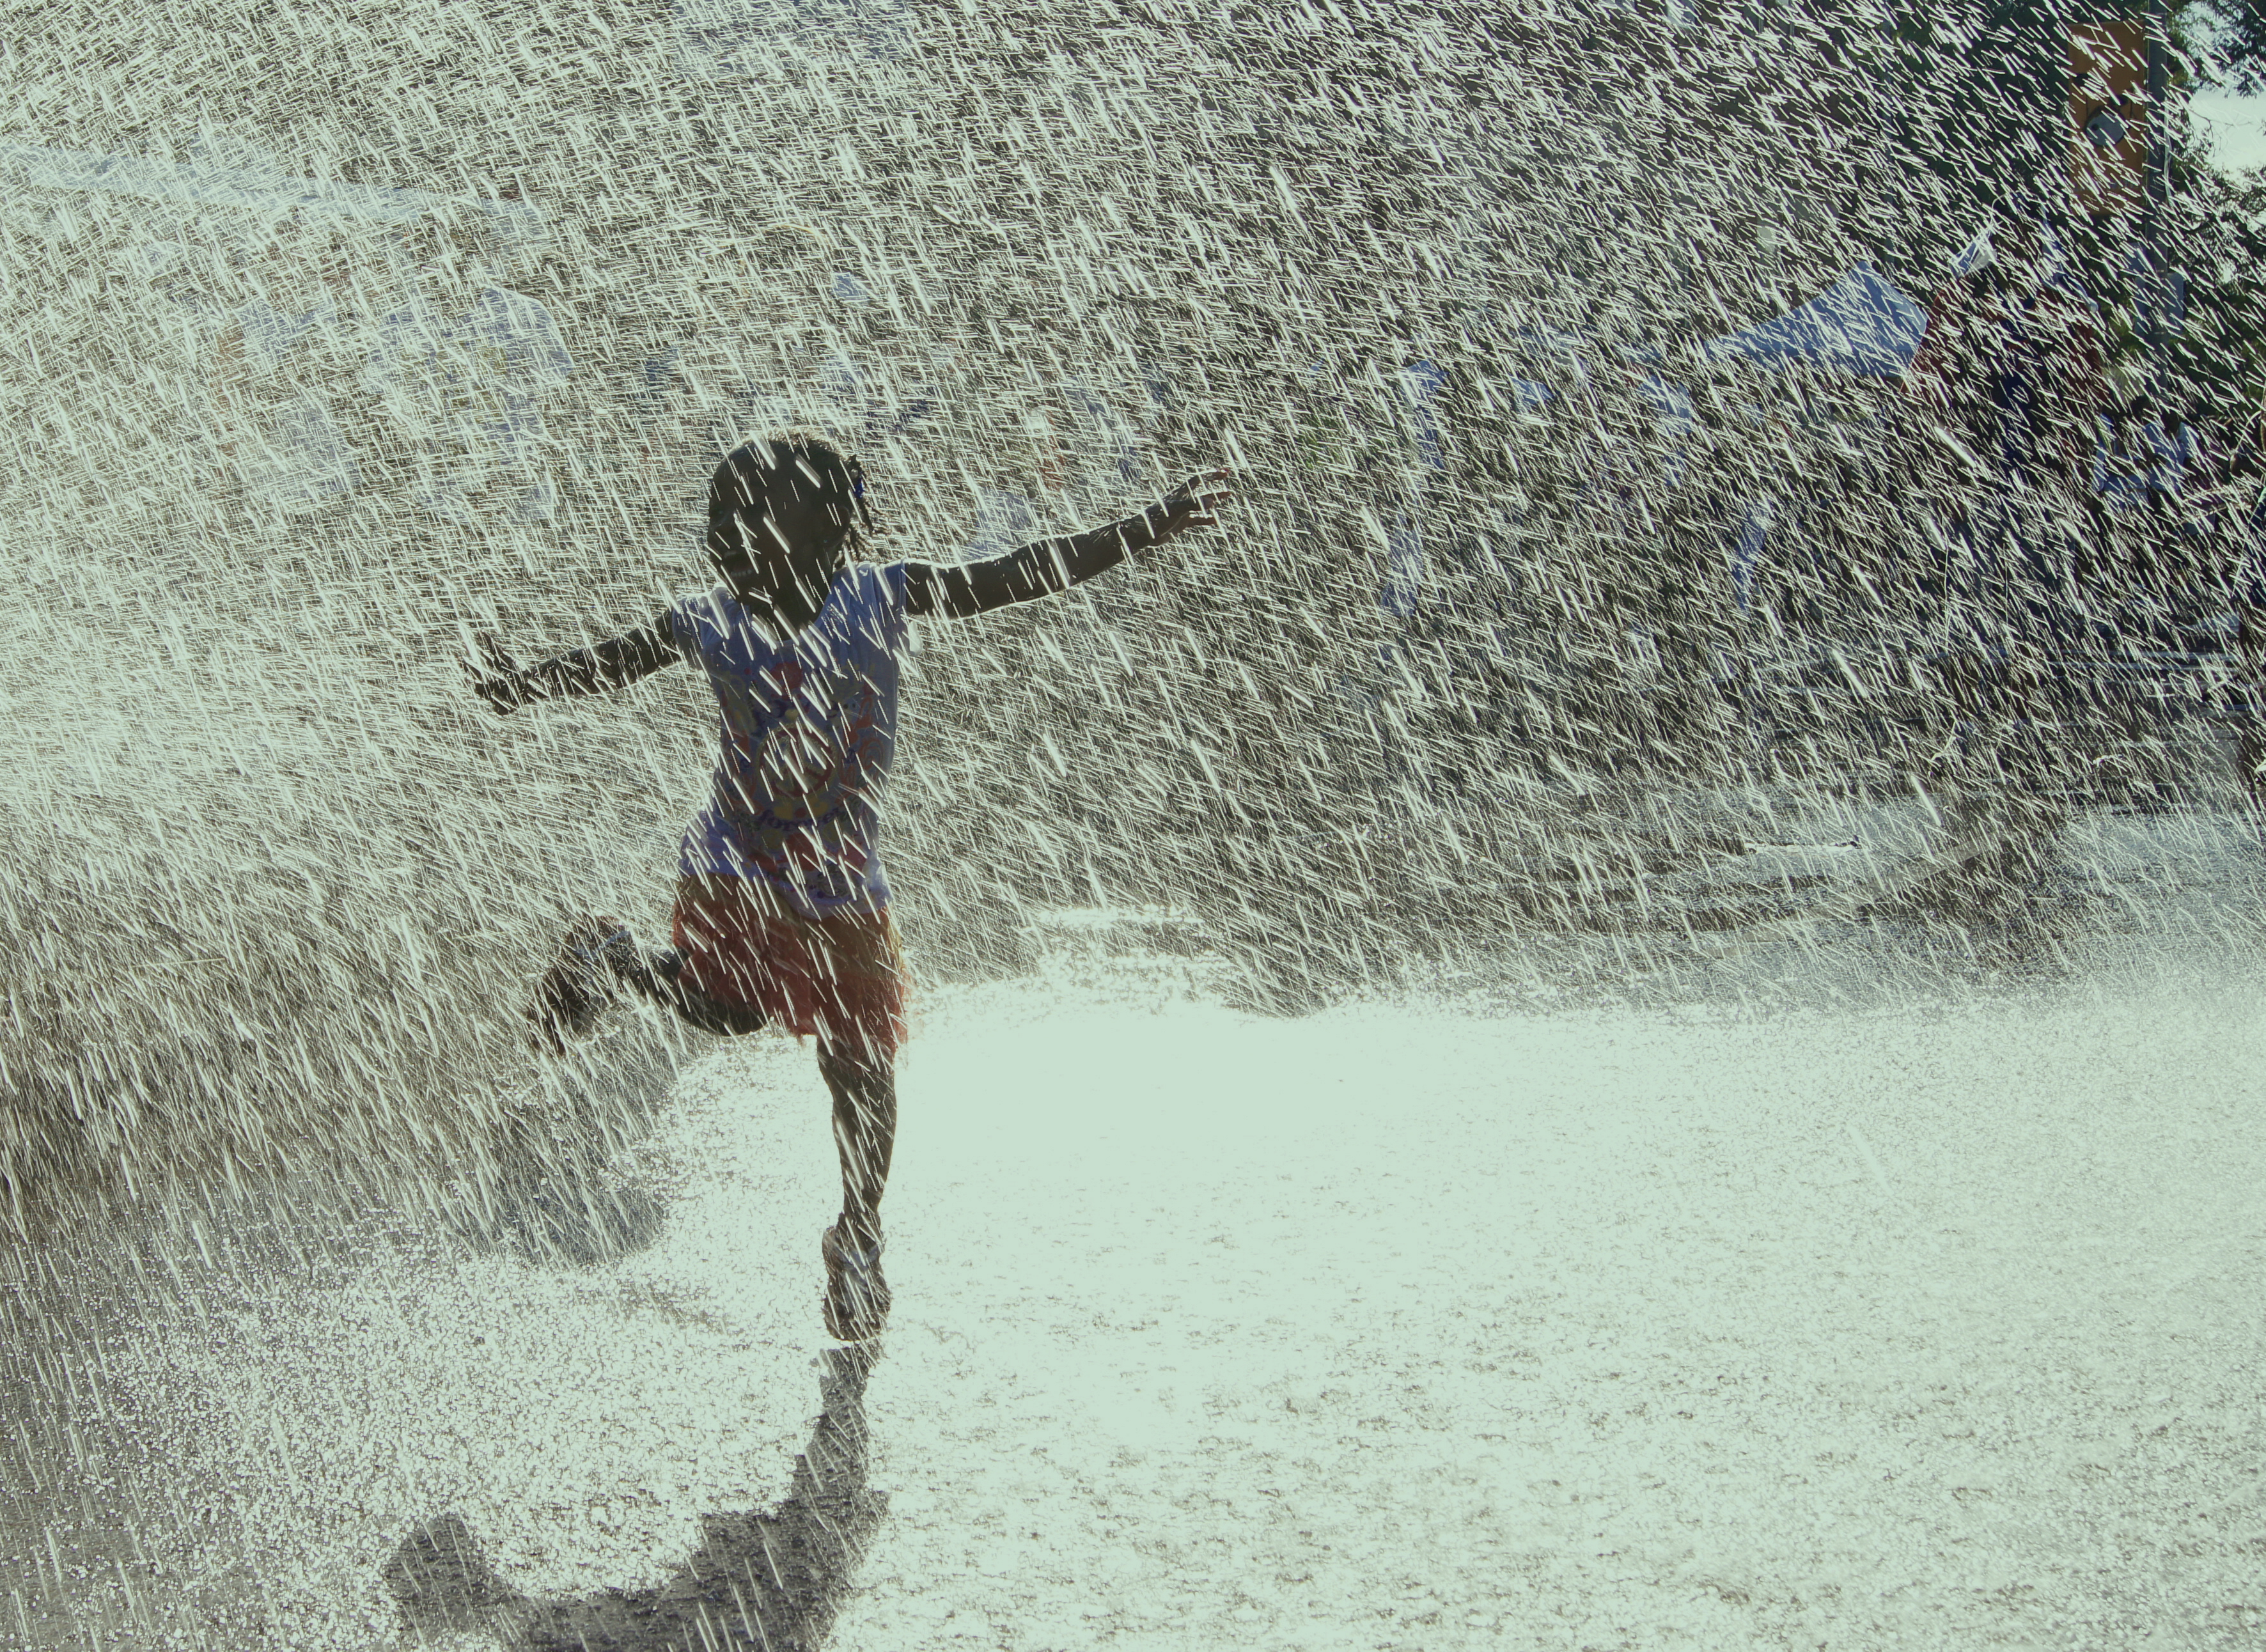 She s in the rain. Человек под дождем. Радость под дождем. Бегать под дождем. Танцевать под дождем.